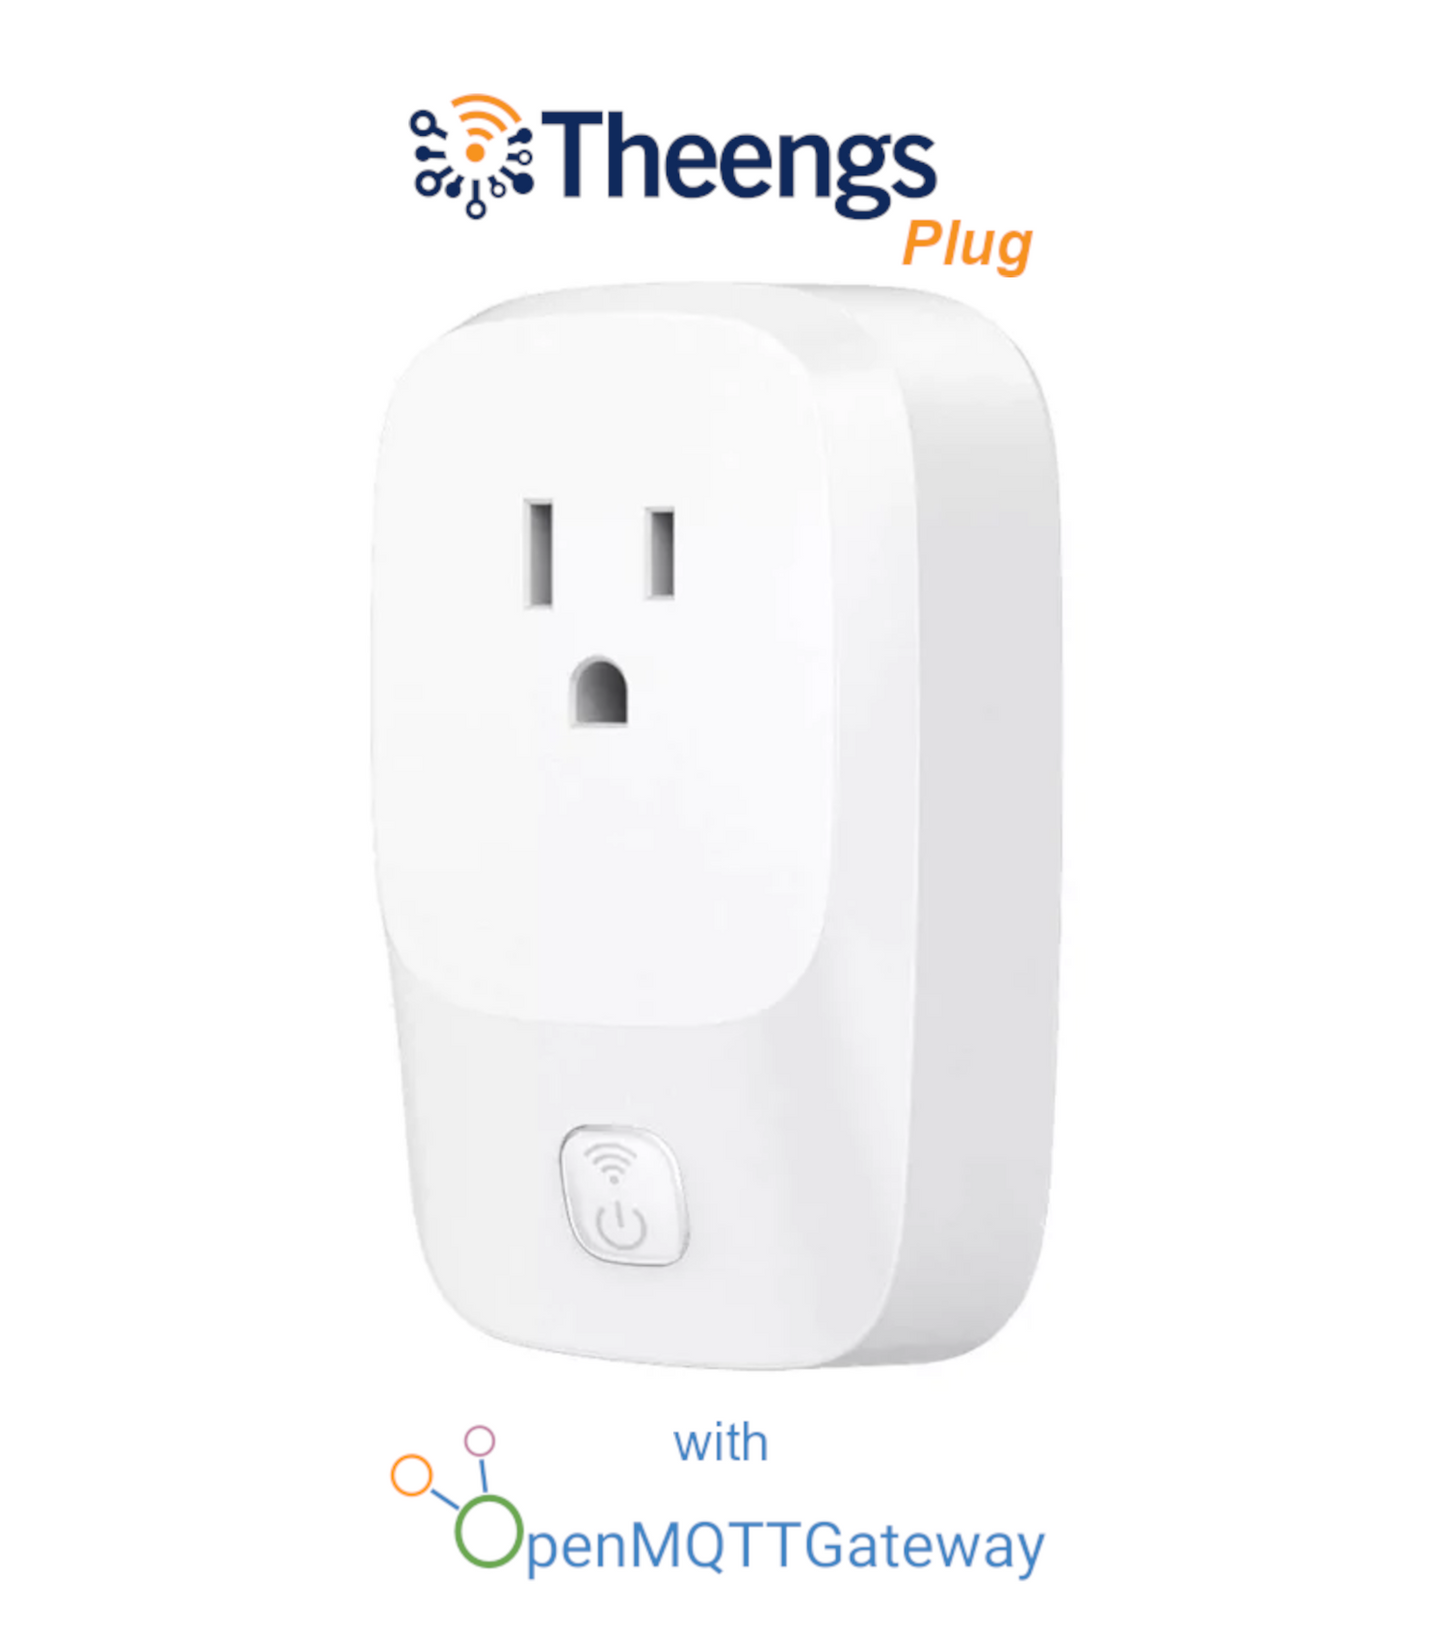 Theengs Plug - ESP32 BLE MQTT gateway, smart plug and energy consumption